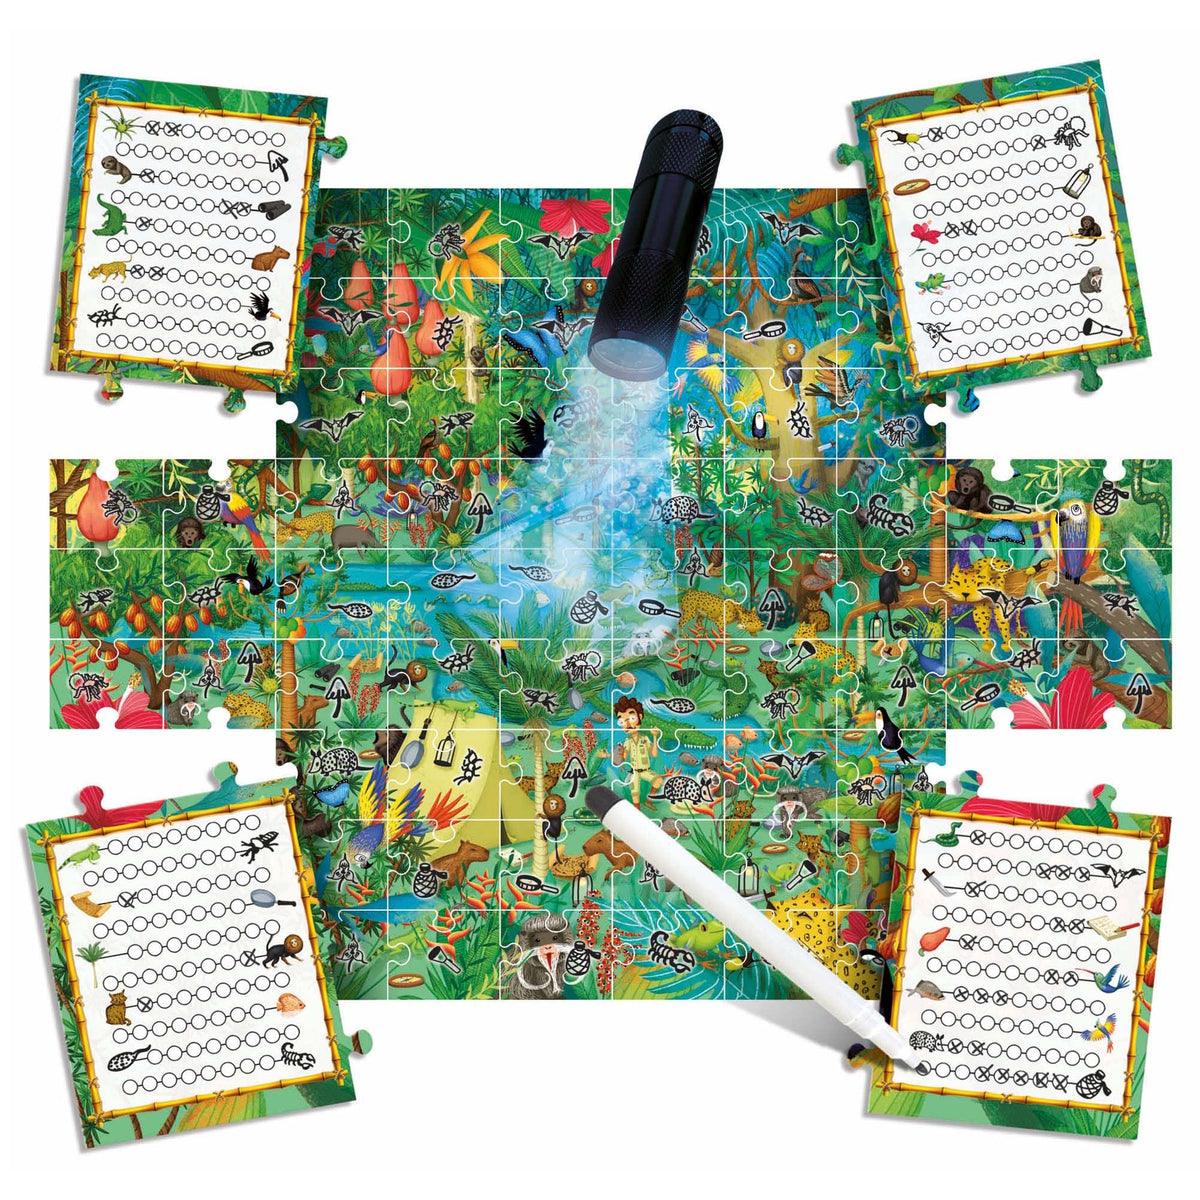 HEADU Explore the Forest Puzzle